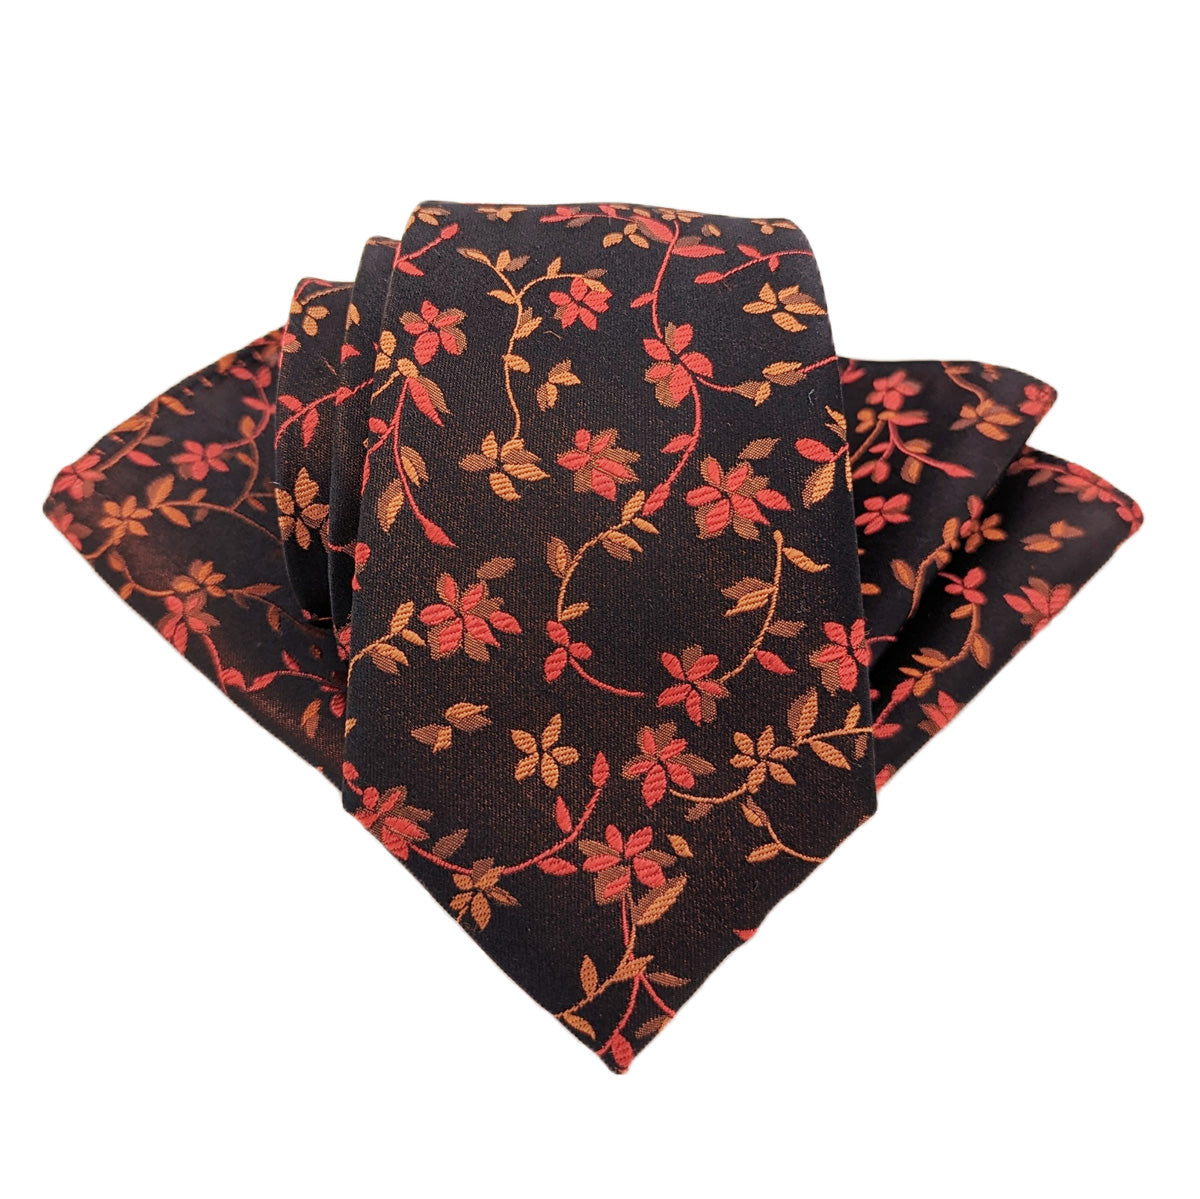 Flaming Red Floral Silk Wedding Tie